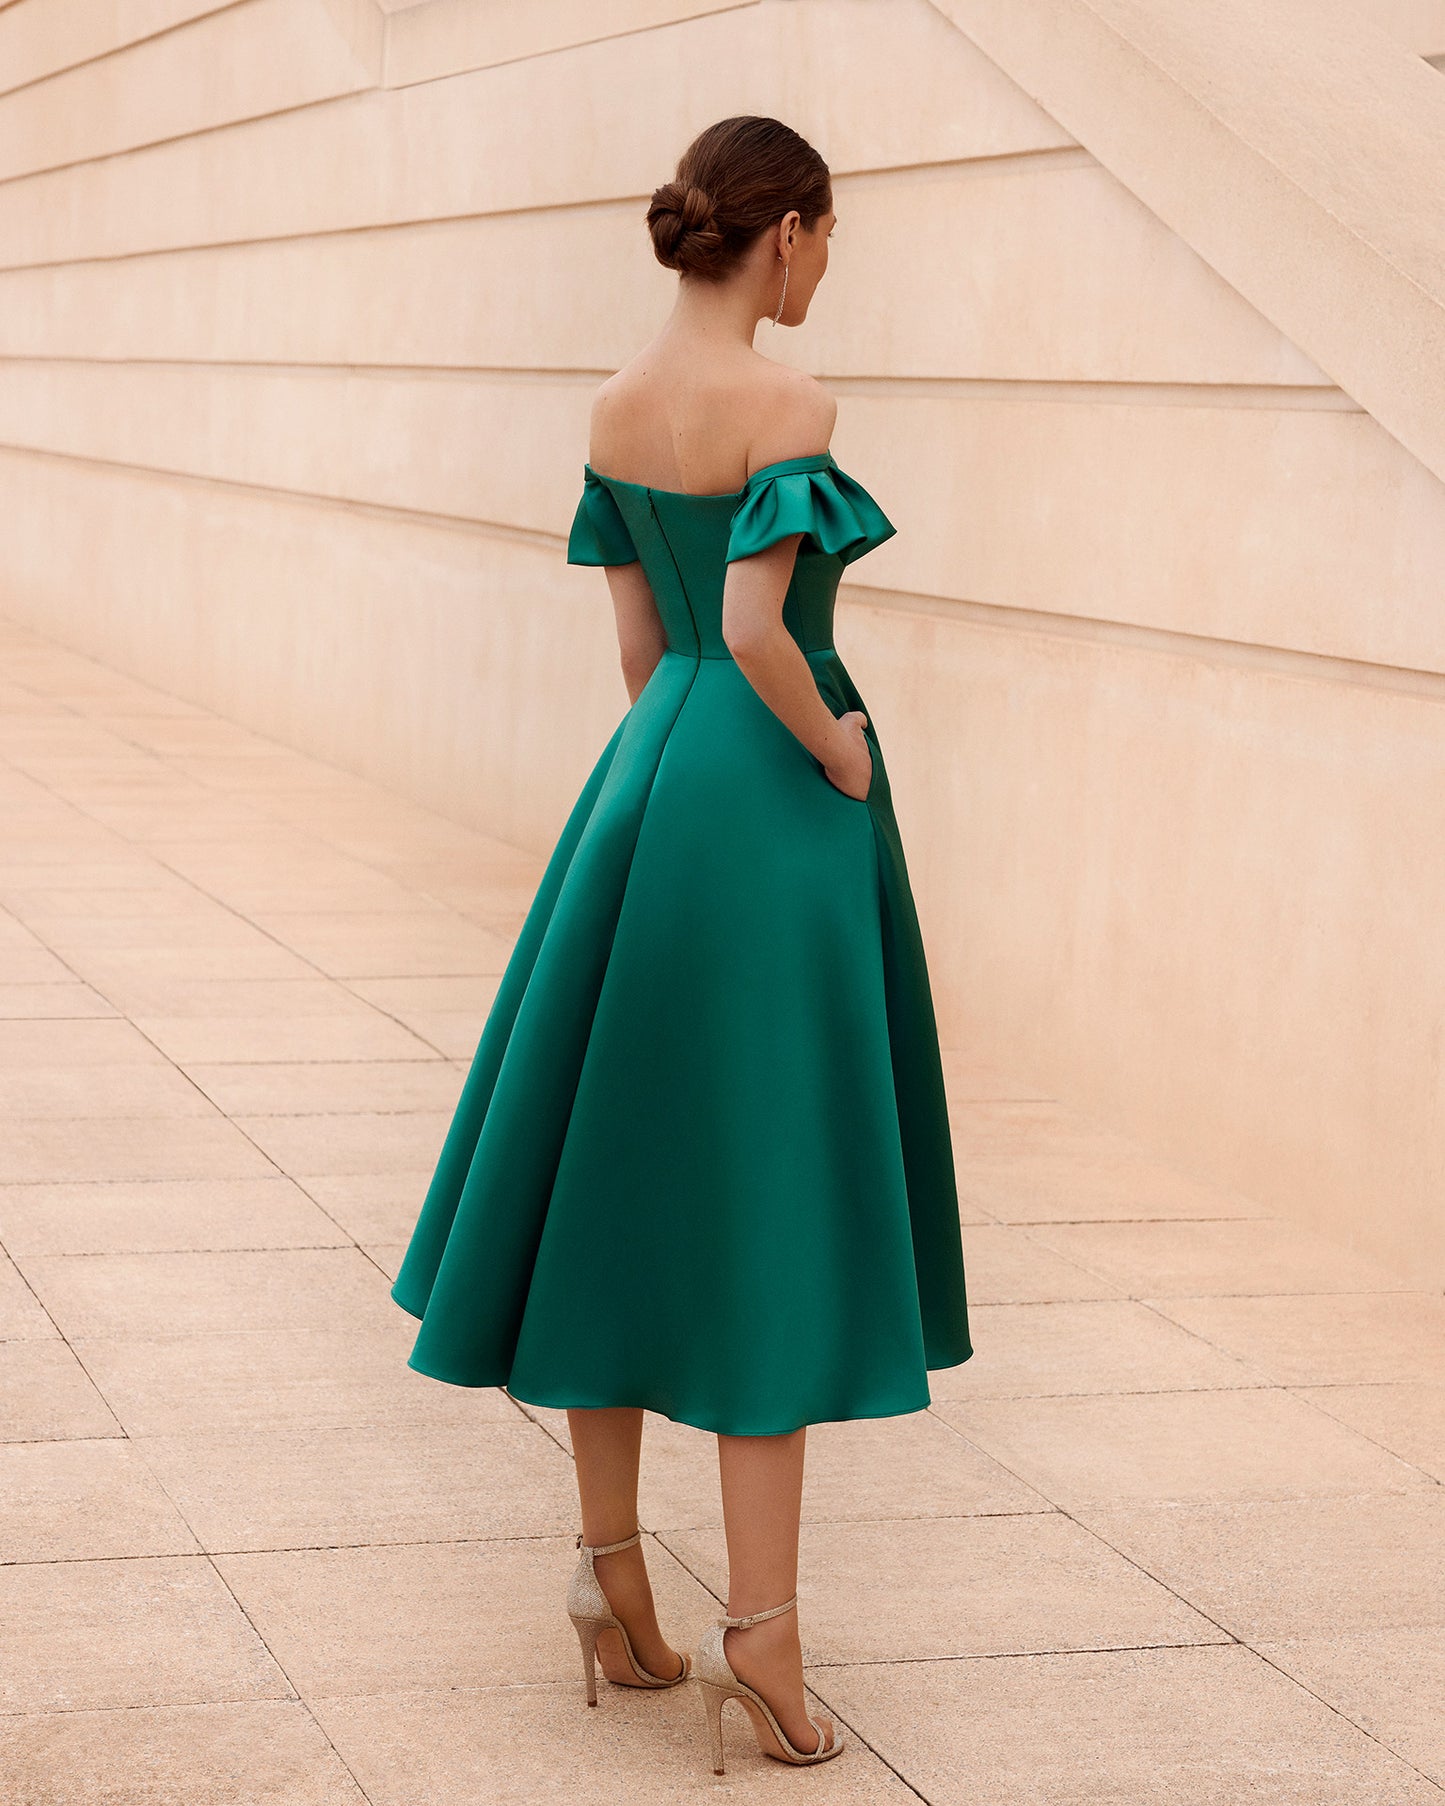 Plain Green Off-the-shoulder dress